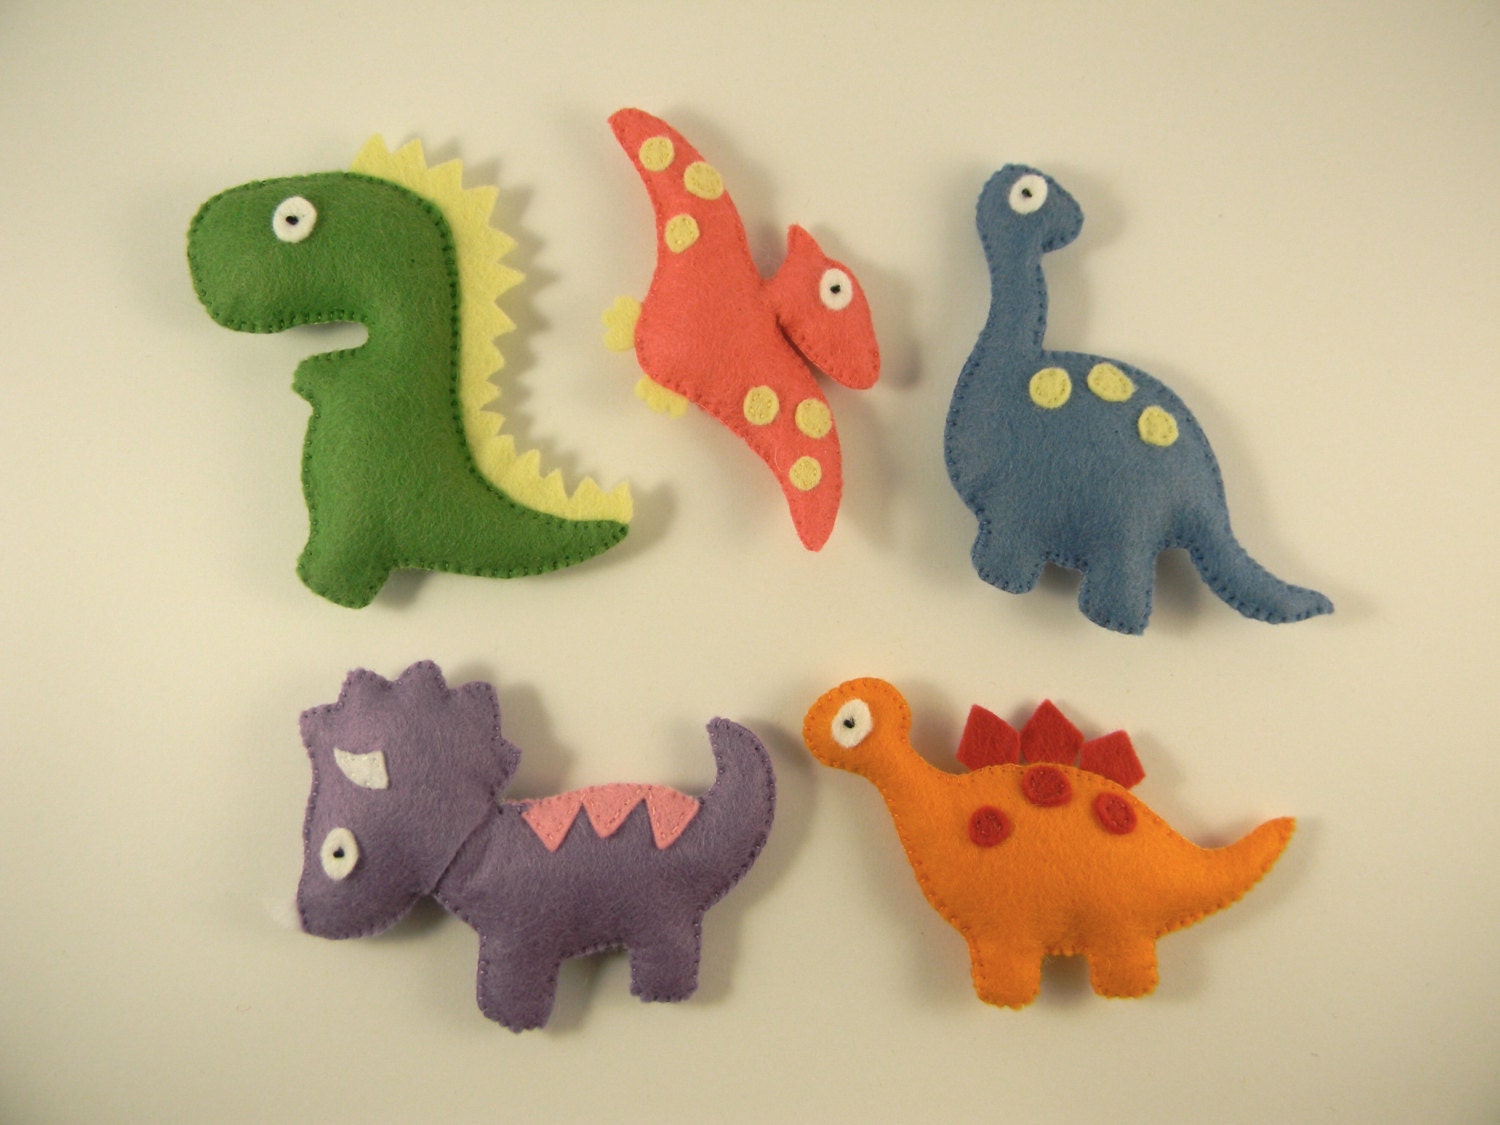 Set 5 Felt dinosaur toy Dinosaur ornament birthday party